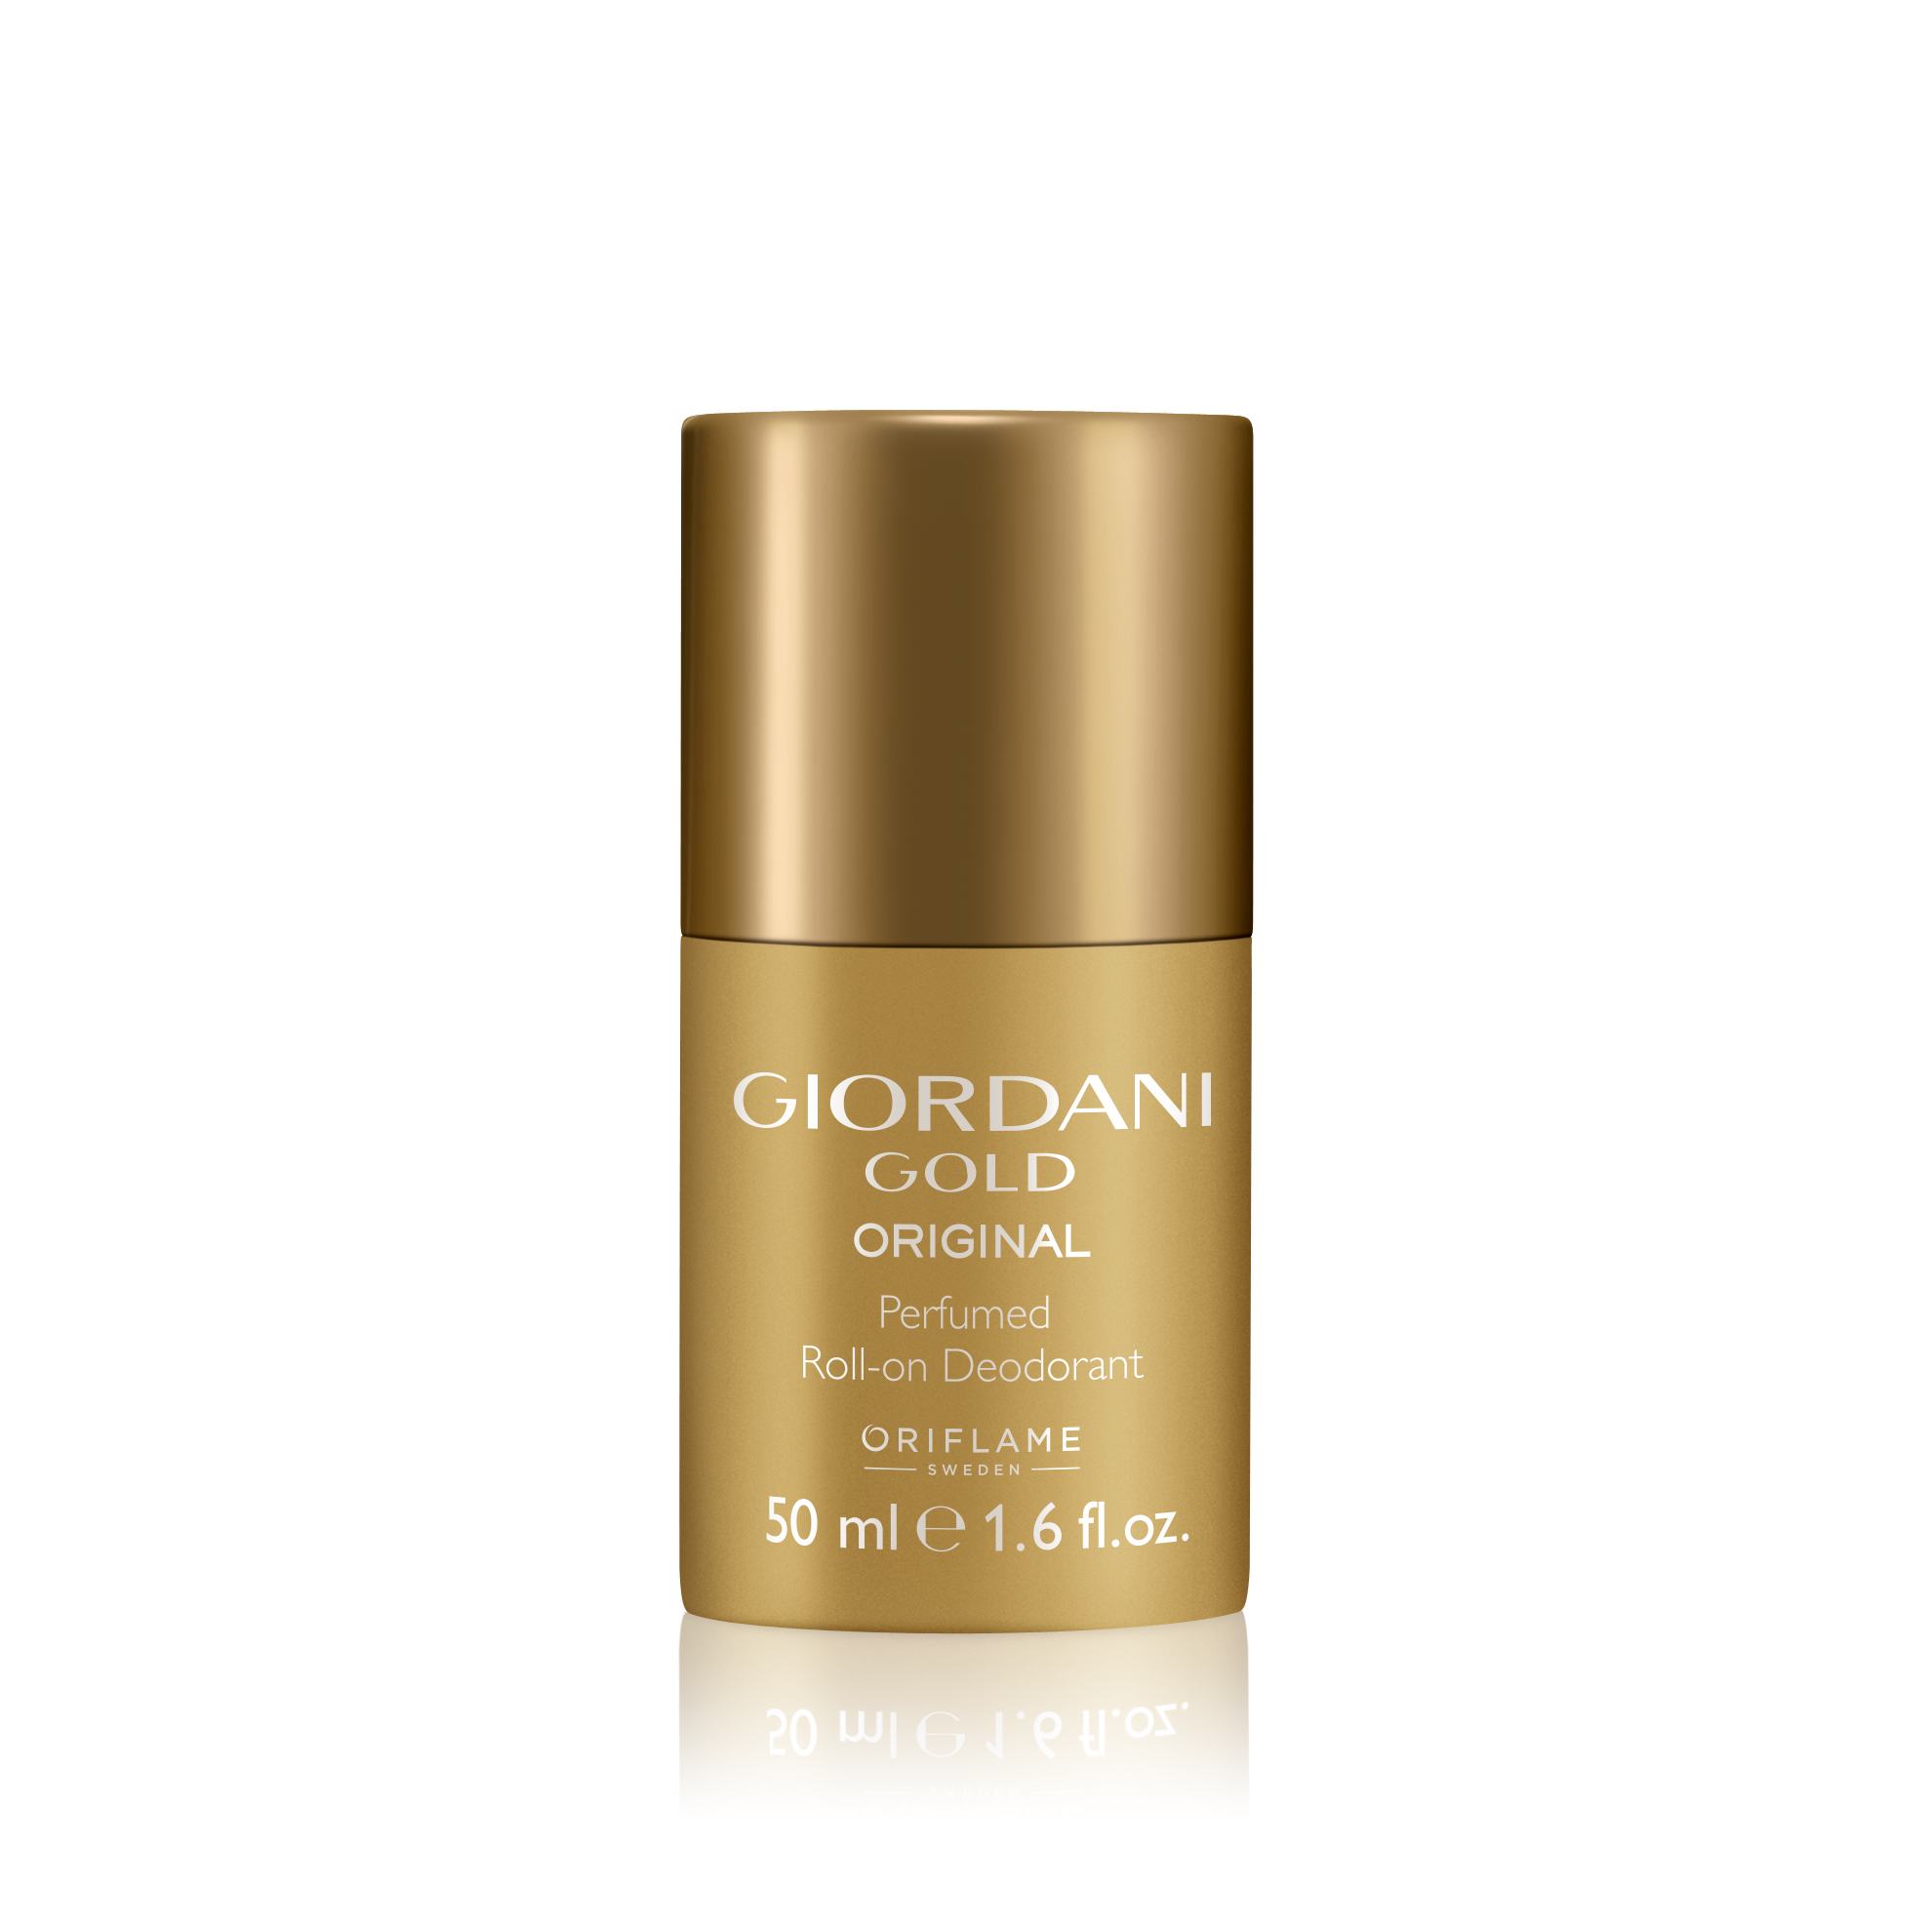 Giordani Gold Original Perfumed Roll-On Deodorant (32160) body-spray-and- deodorant – Chăm Sóc Cá Nhân | Oriflame cosmetics